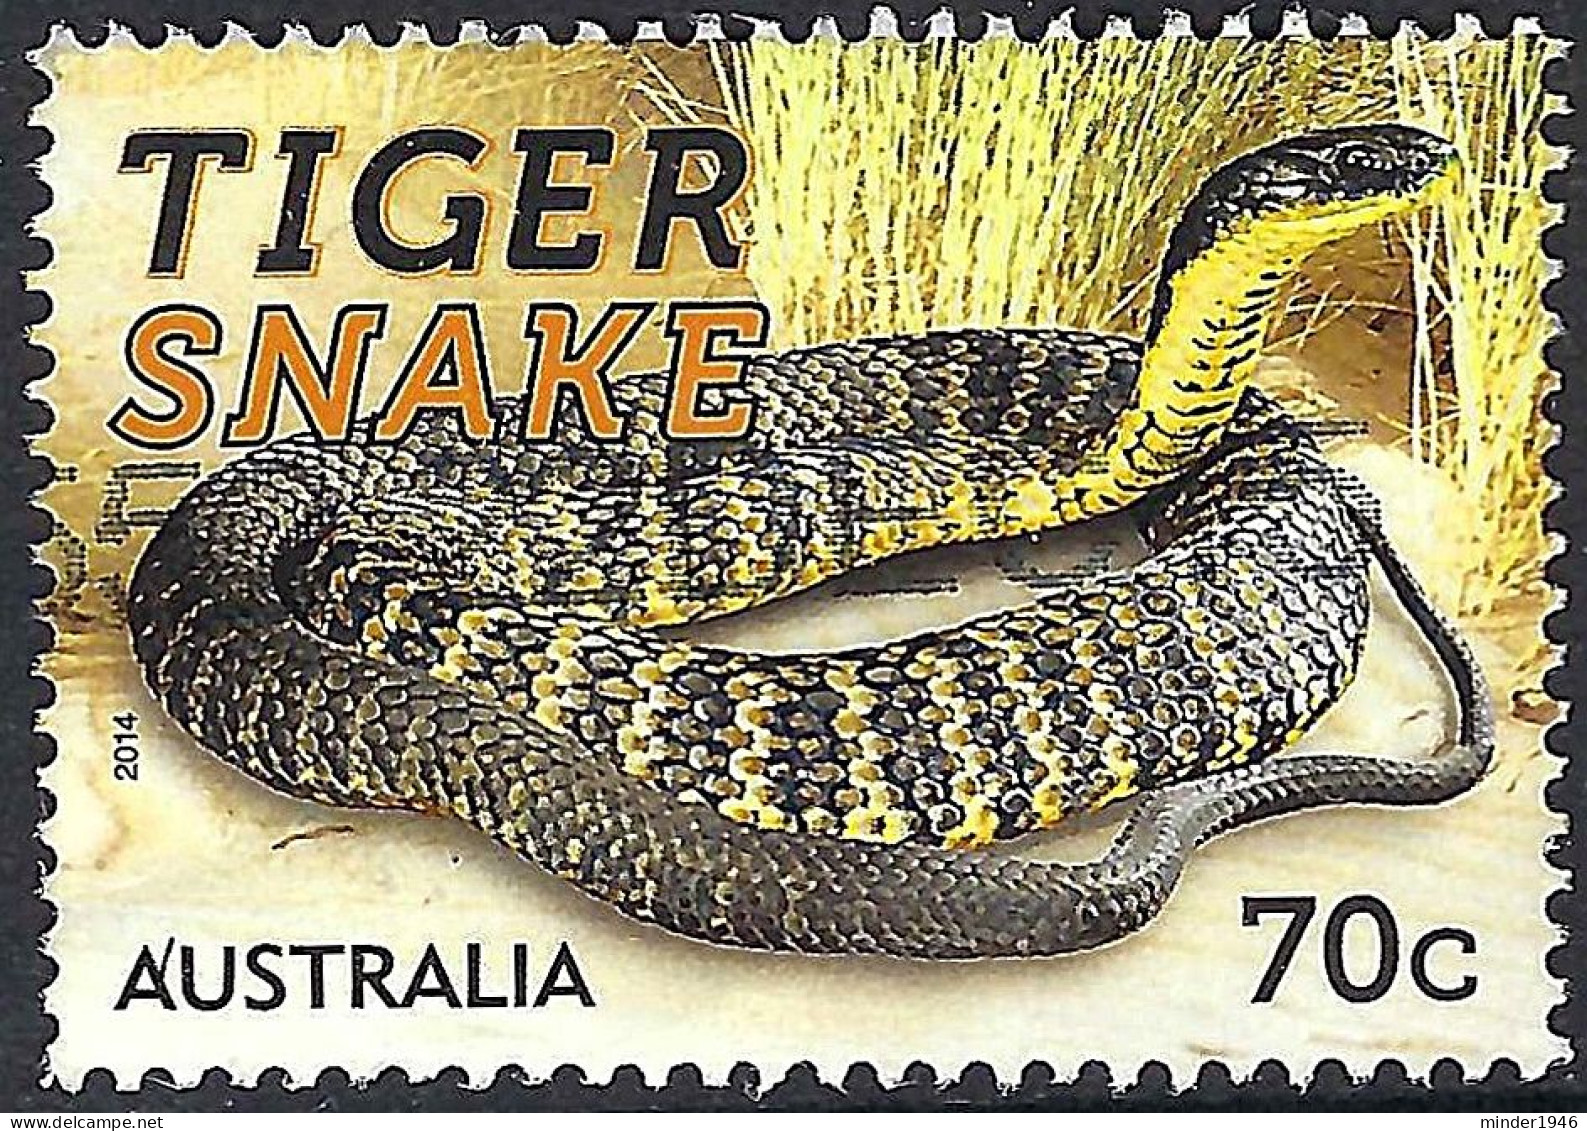 AUSTRALIA 2014 QEII 70c Multicoloured, Fauna-Things That Sting- Tiger Snake FU - Gebruikt